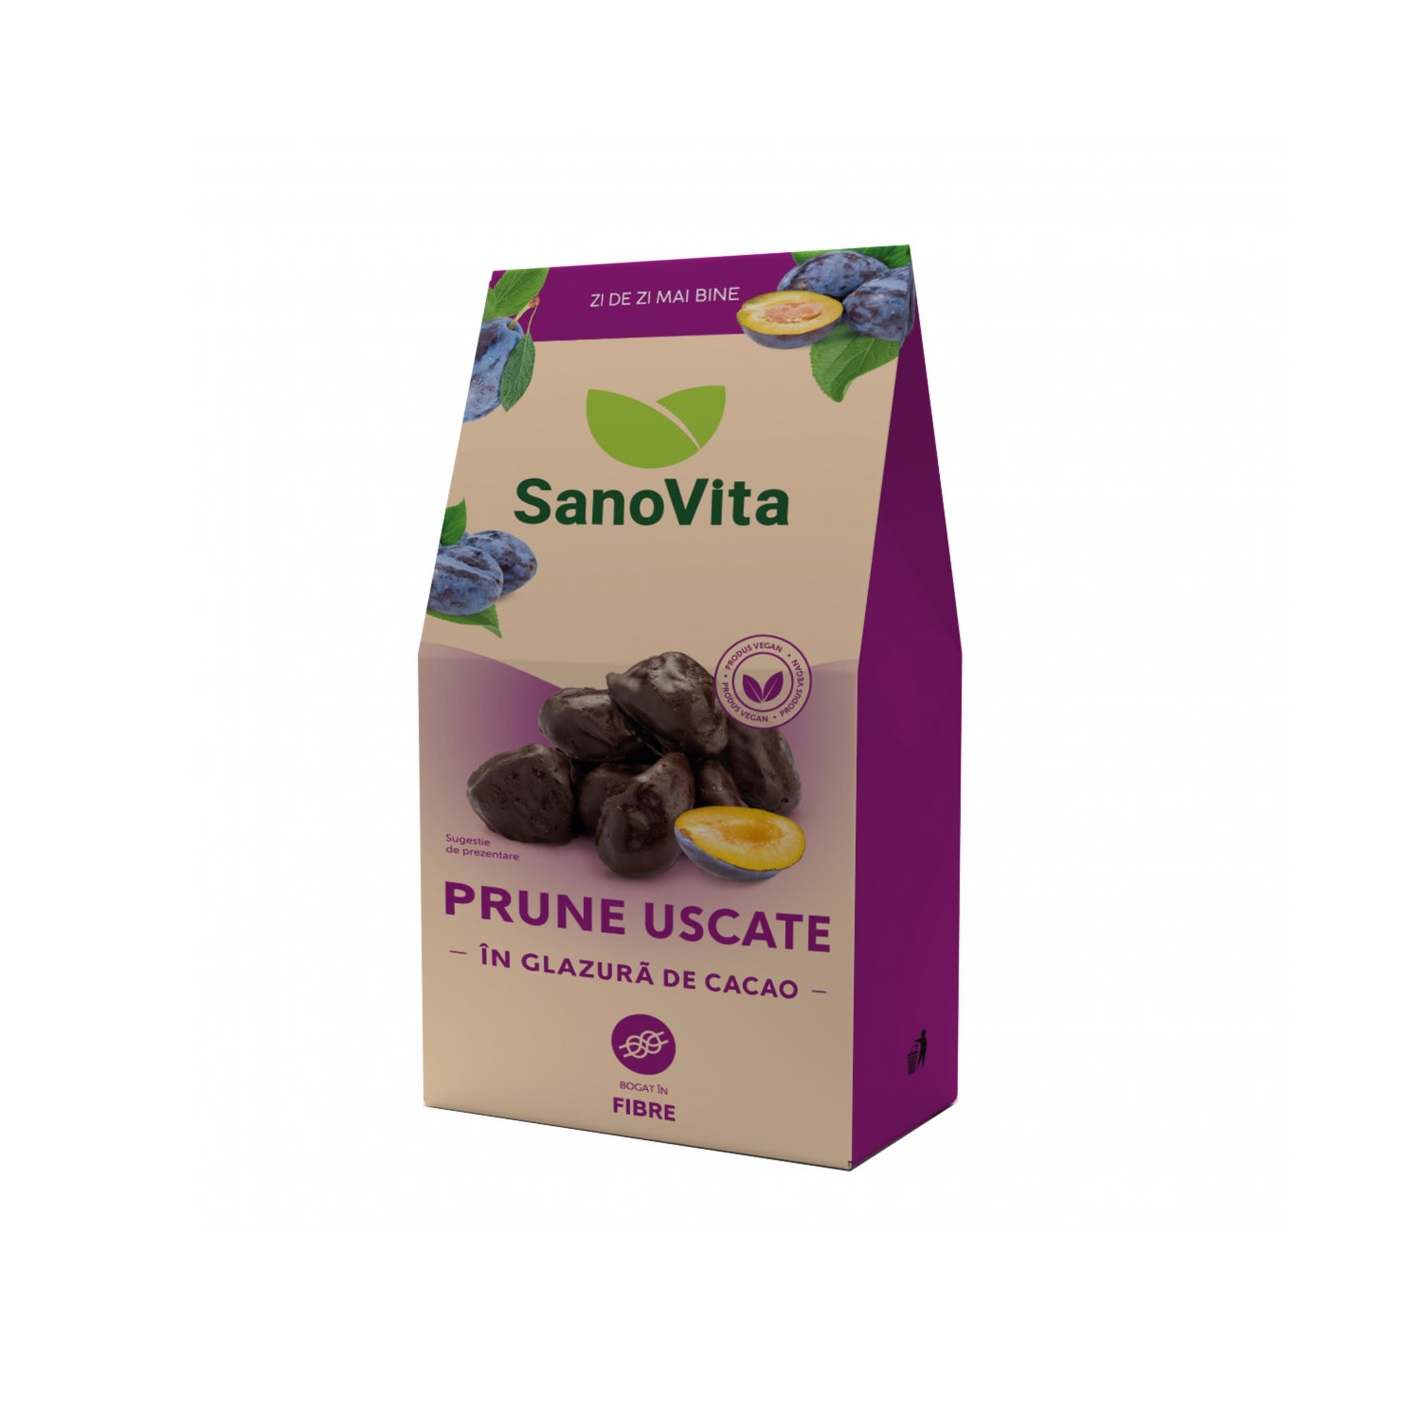 Prune uscate in glazura de cacao, 150 g, Sanovita